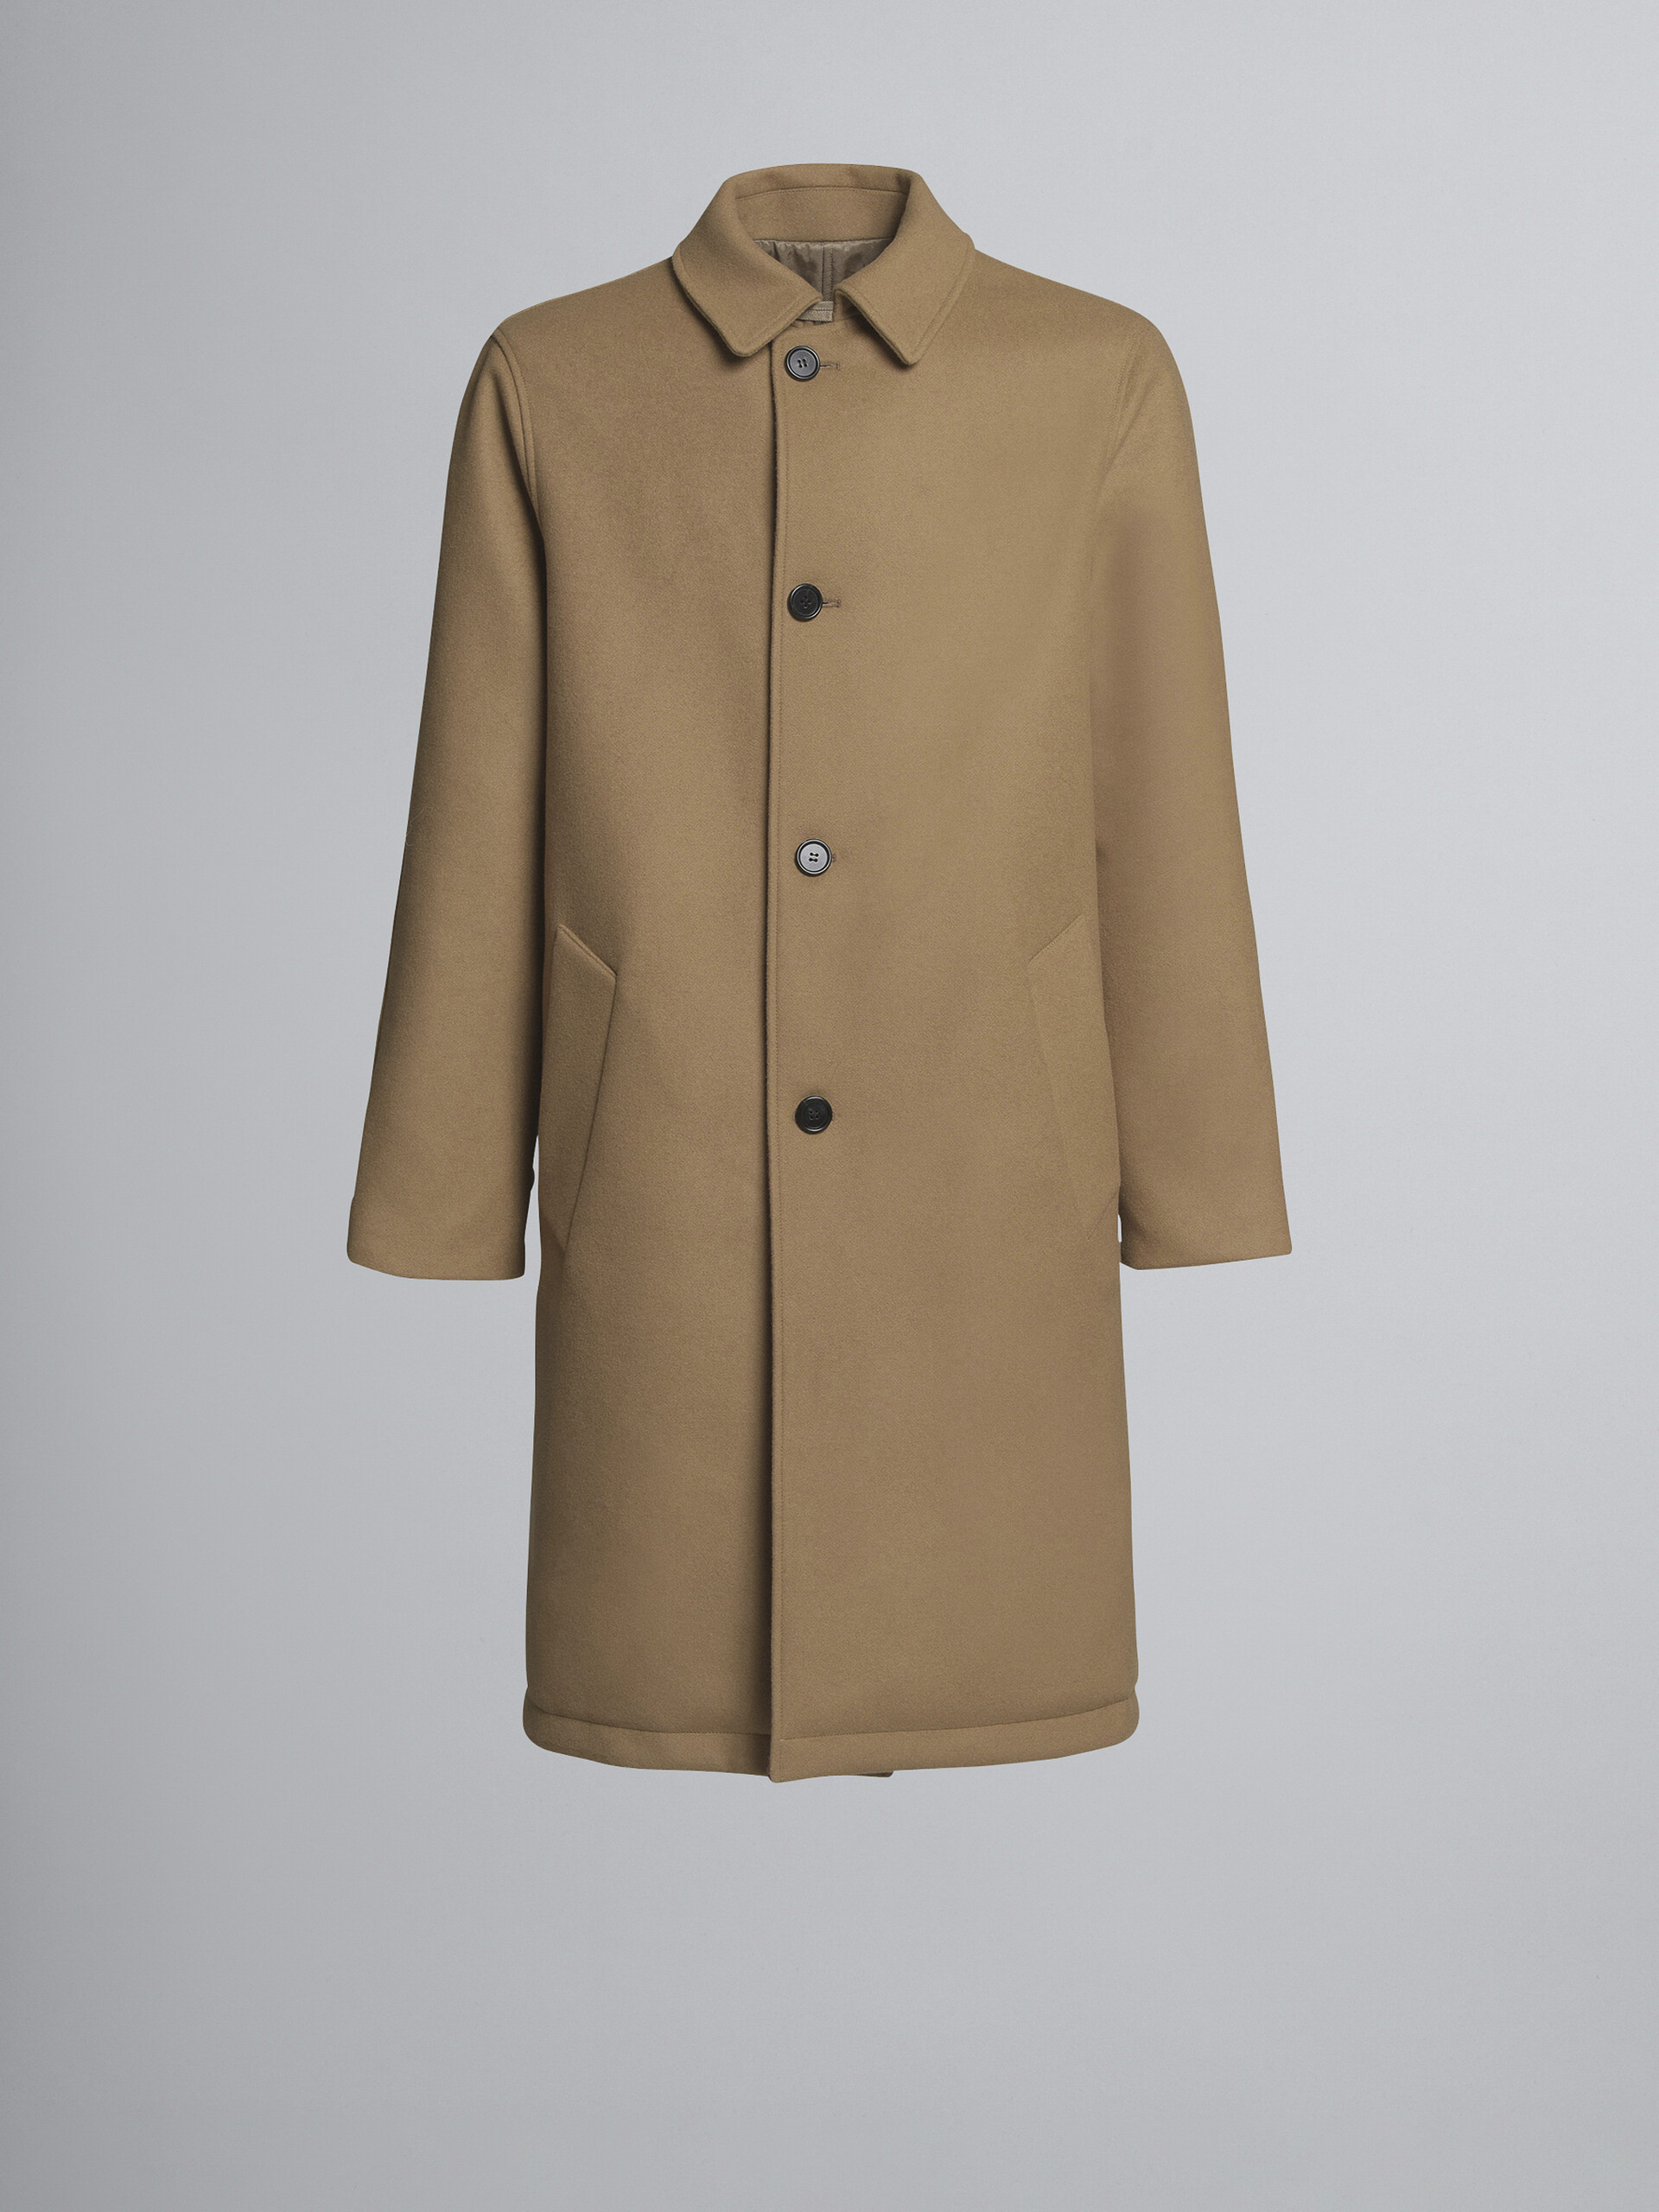 Reversible light wool felt coat - Coat - Image 1